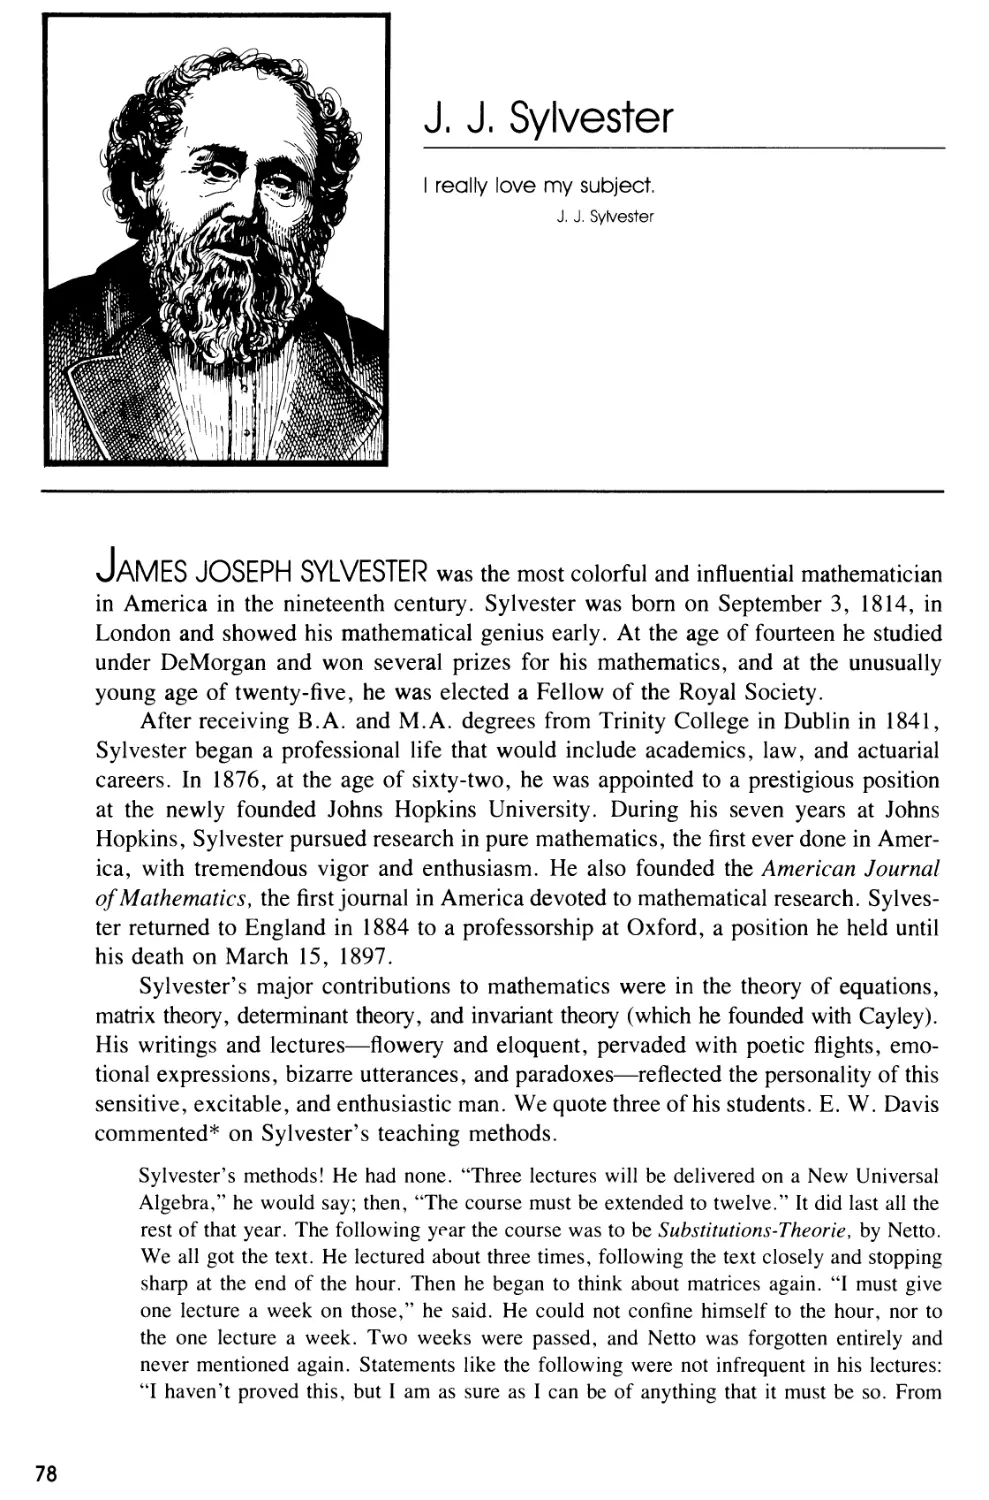 Biography of J. J. Sylvester